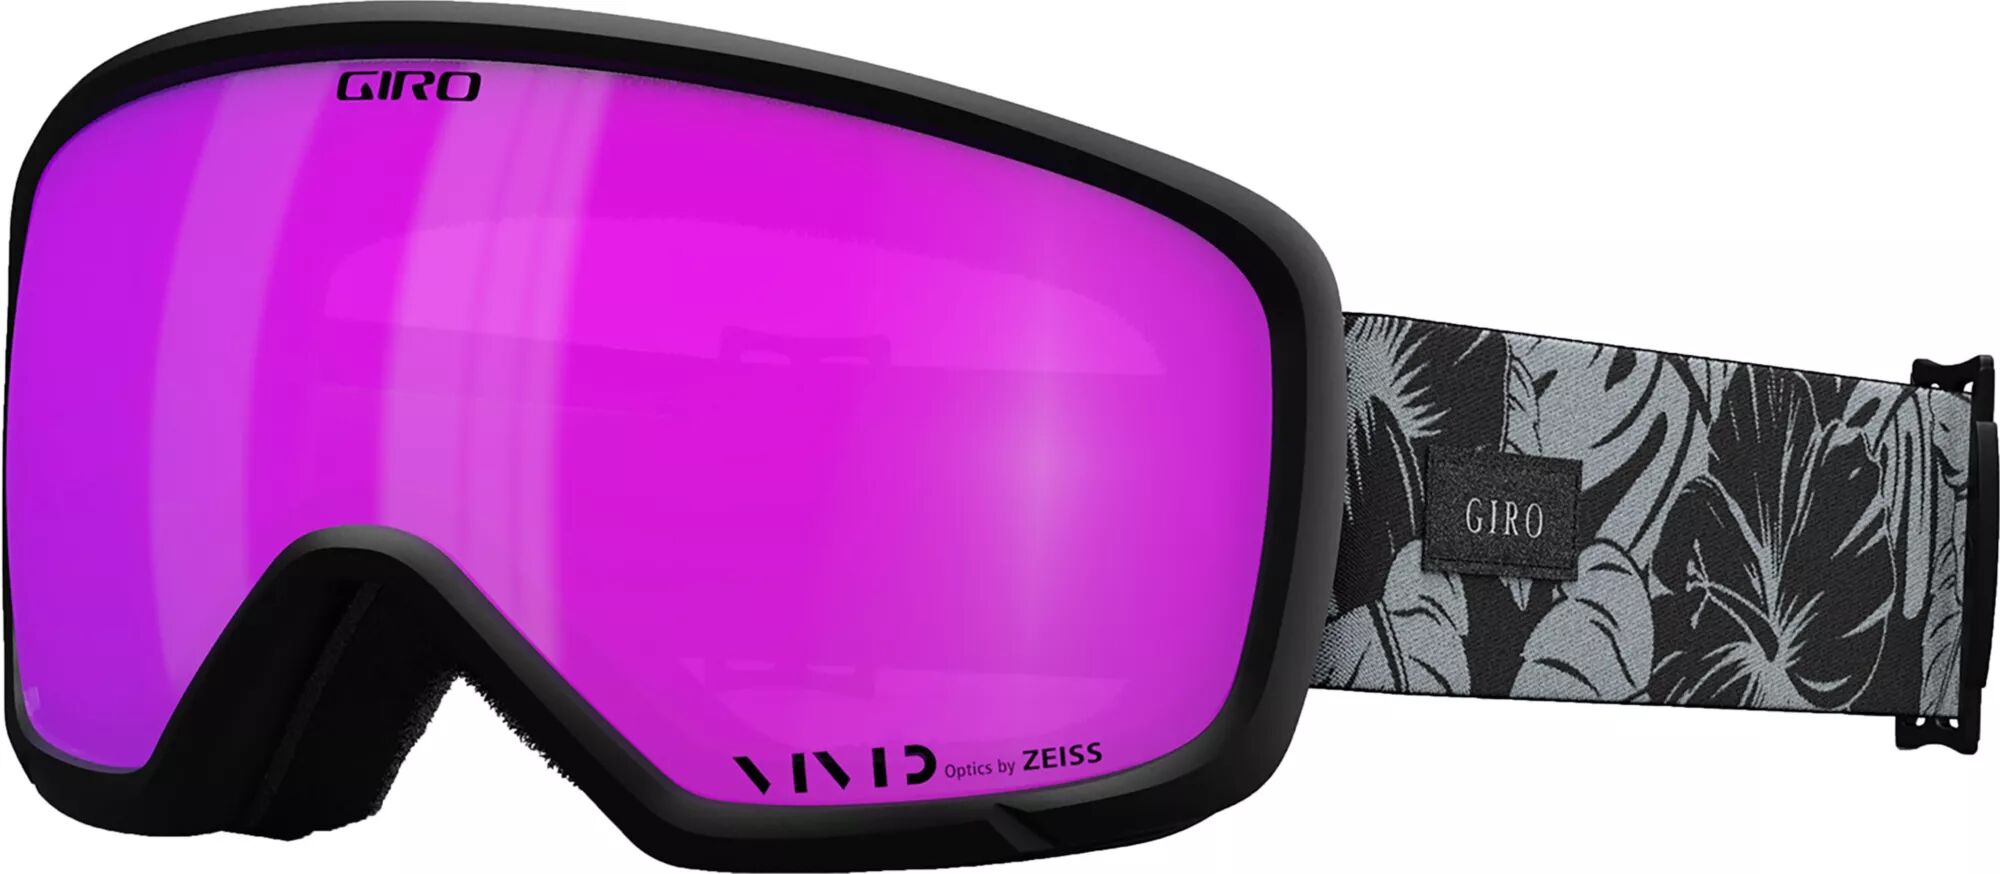 Giro Millie Women's Snow Goggle with Bonus Infrared Lens, Black